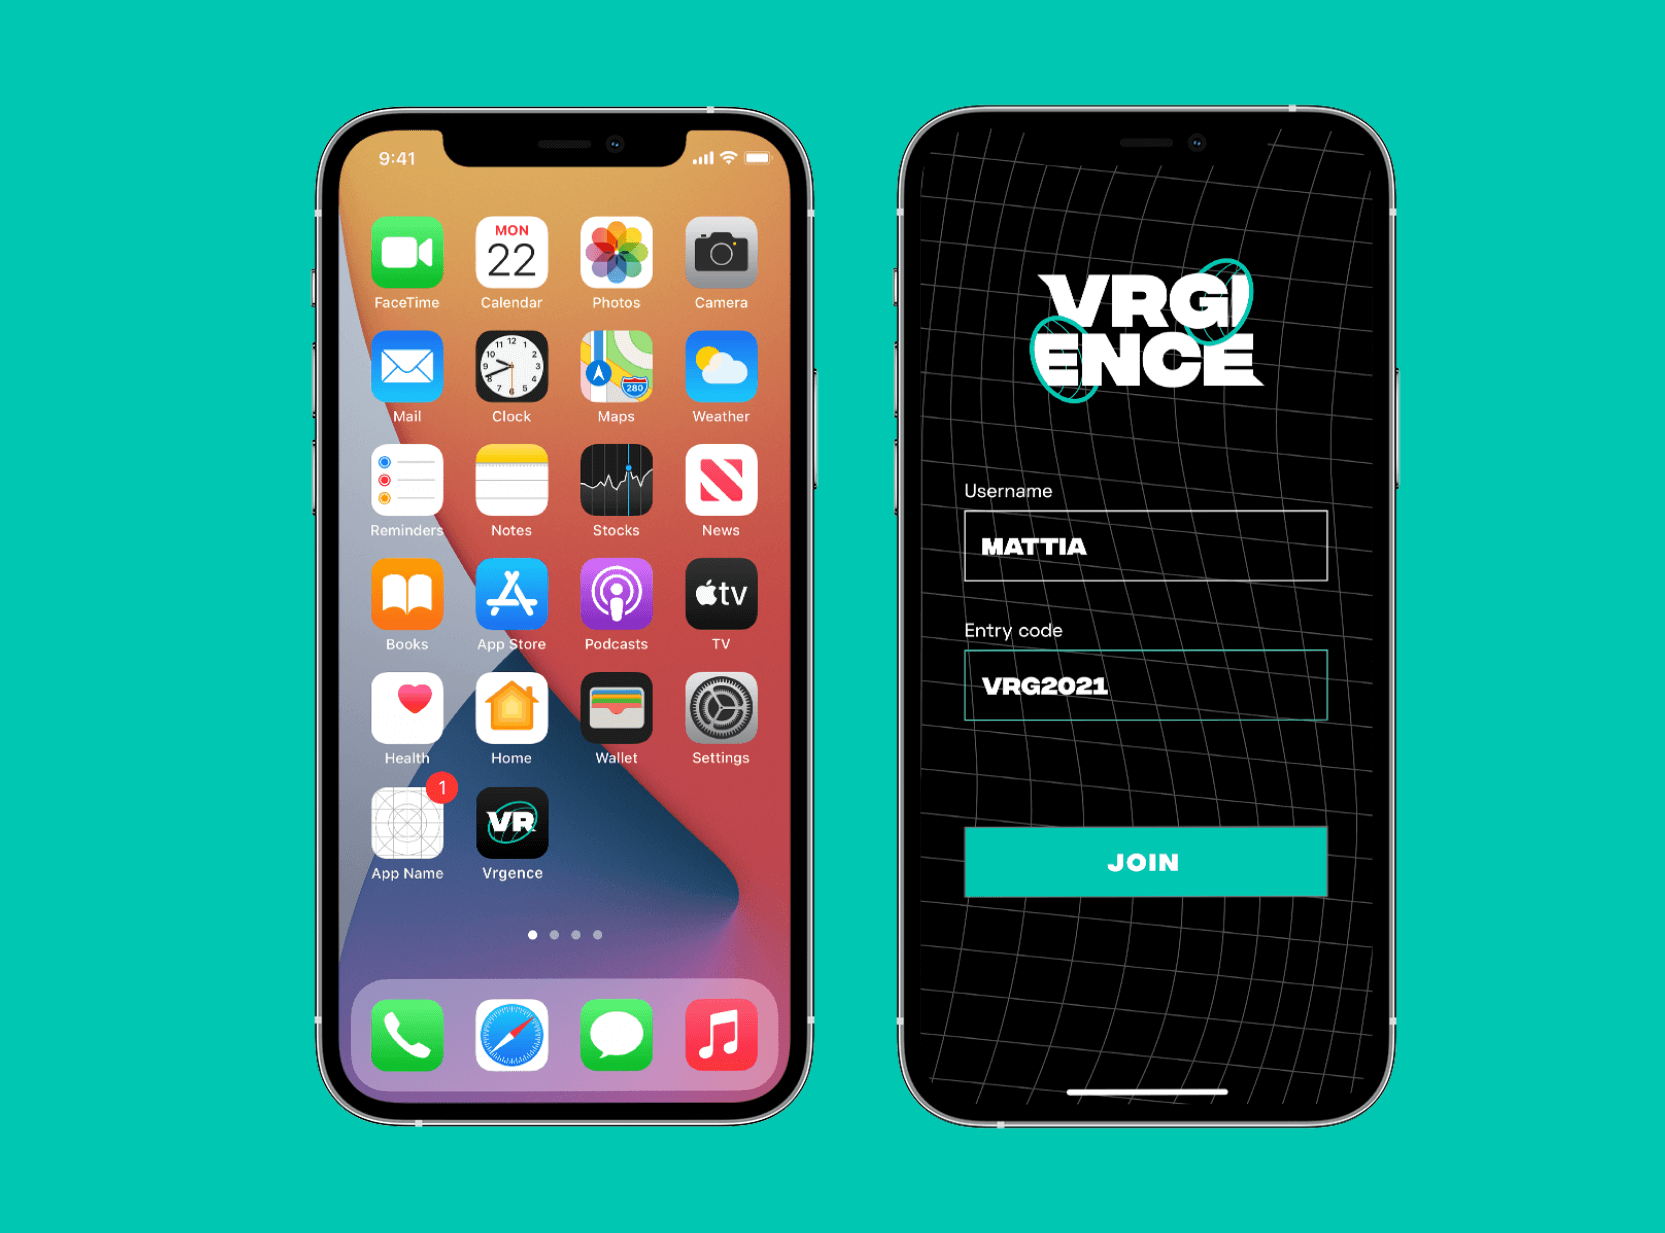 VRGENCE mobile app